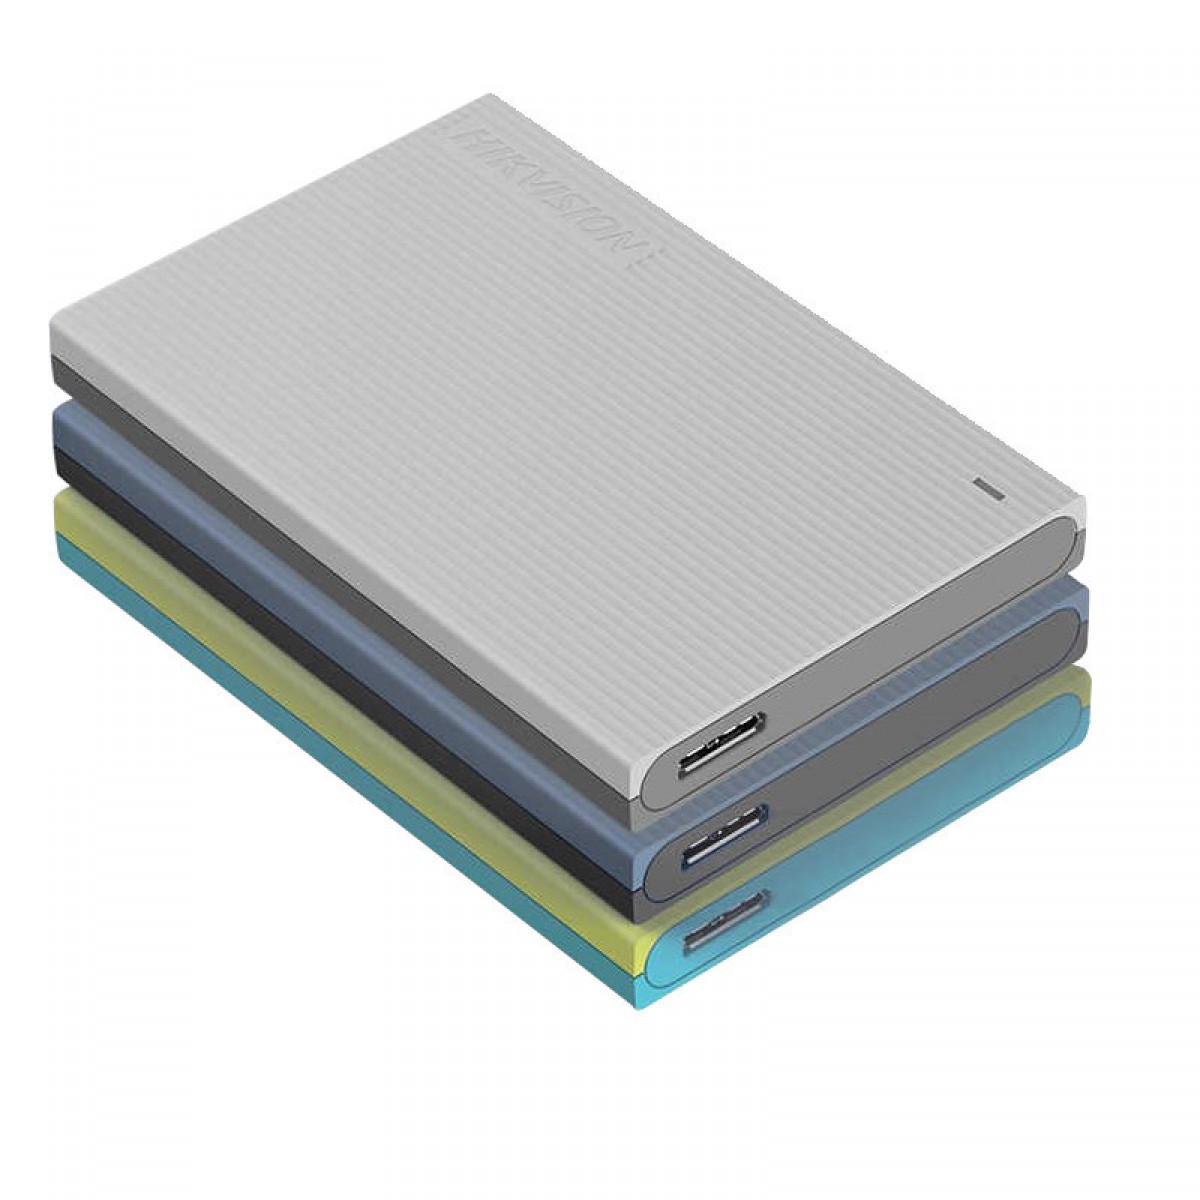 HD Externo Hikvision T30,1TB, USB 3.0, BLUE, HS-EHDD-T30-1T-BLUE